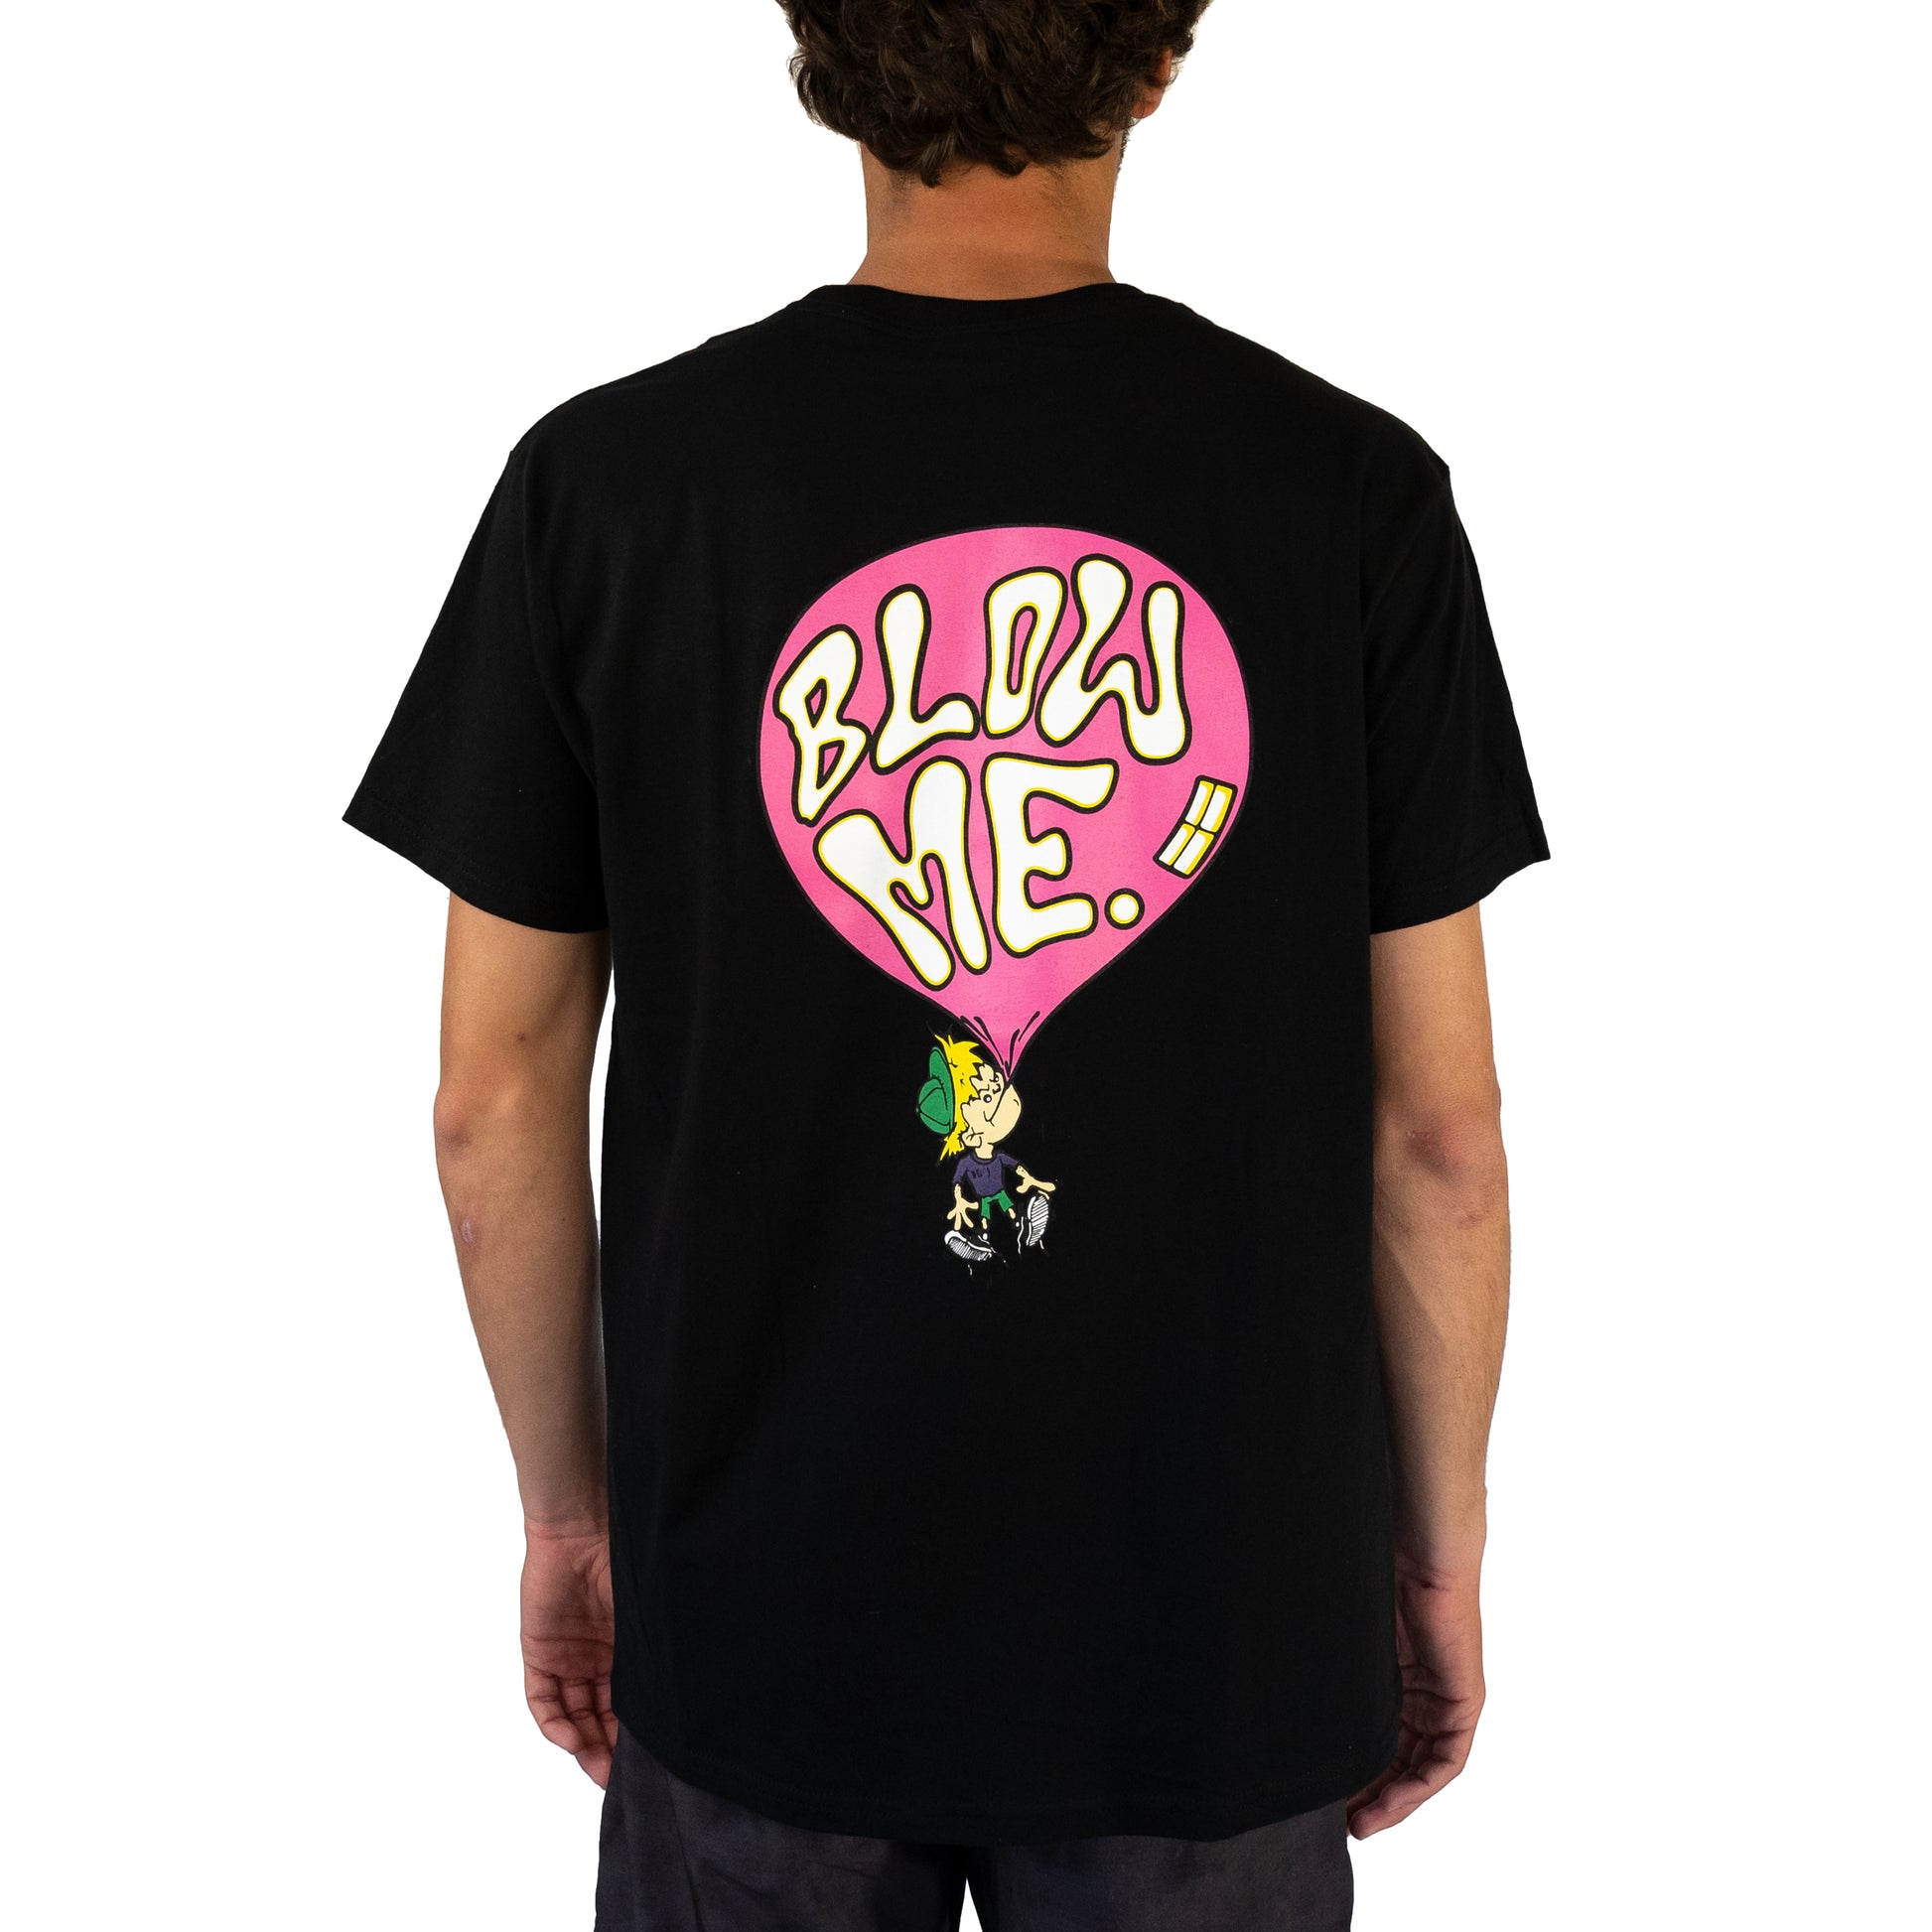 Blow Me T-Shirt Black